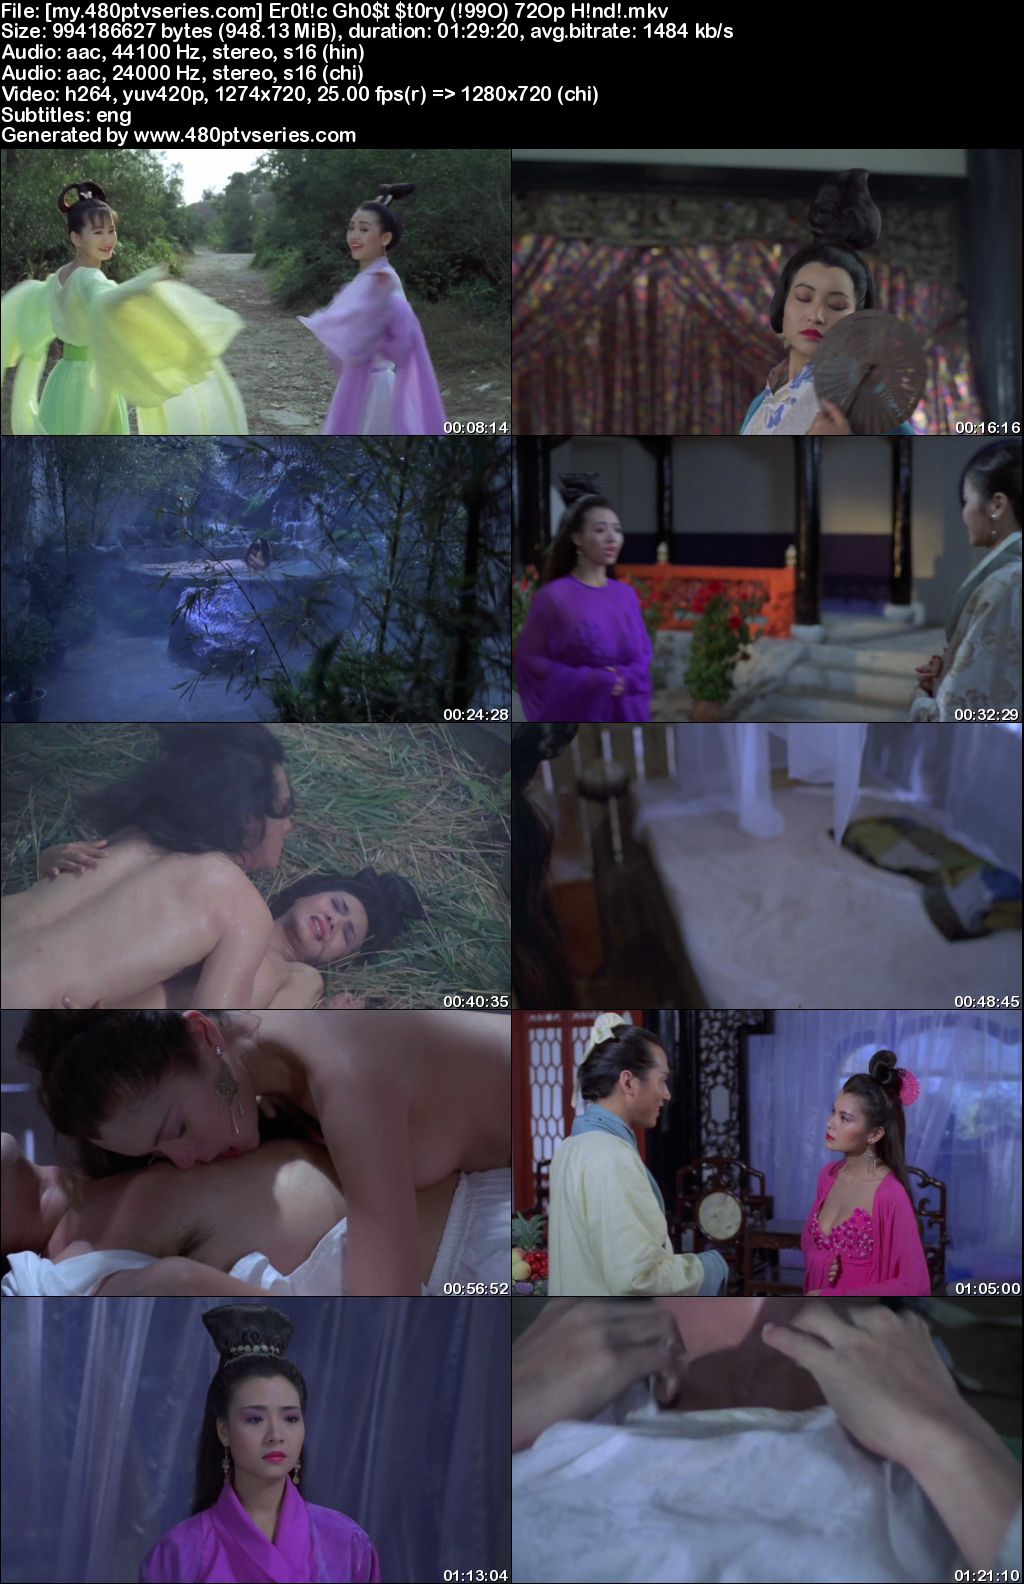 Watch Online Free Erotic Ghost Story (1990) Full Hindi Dual Audio Movie Download 480p 720p Bluray